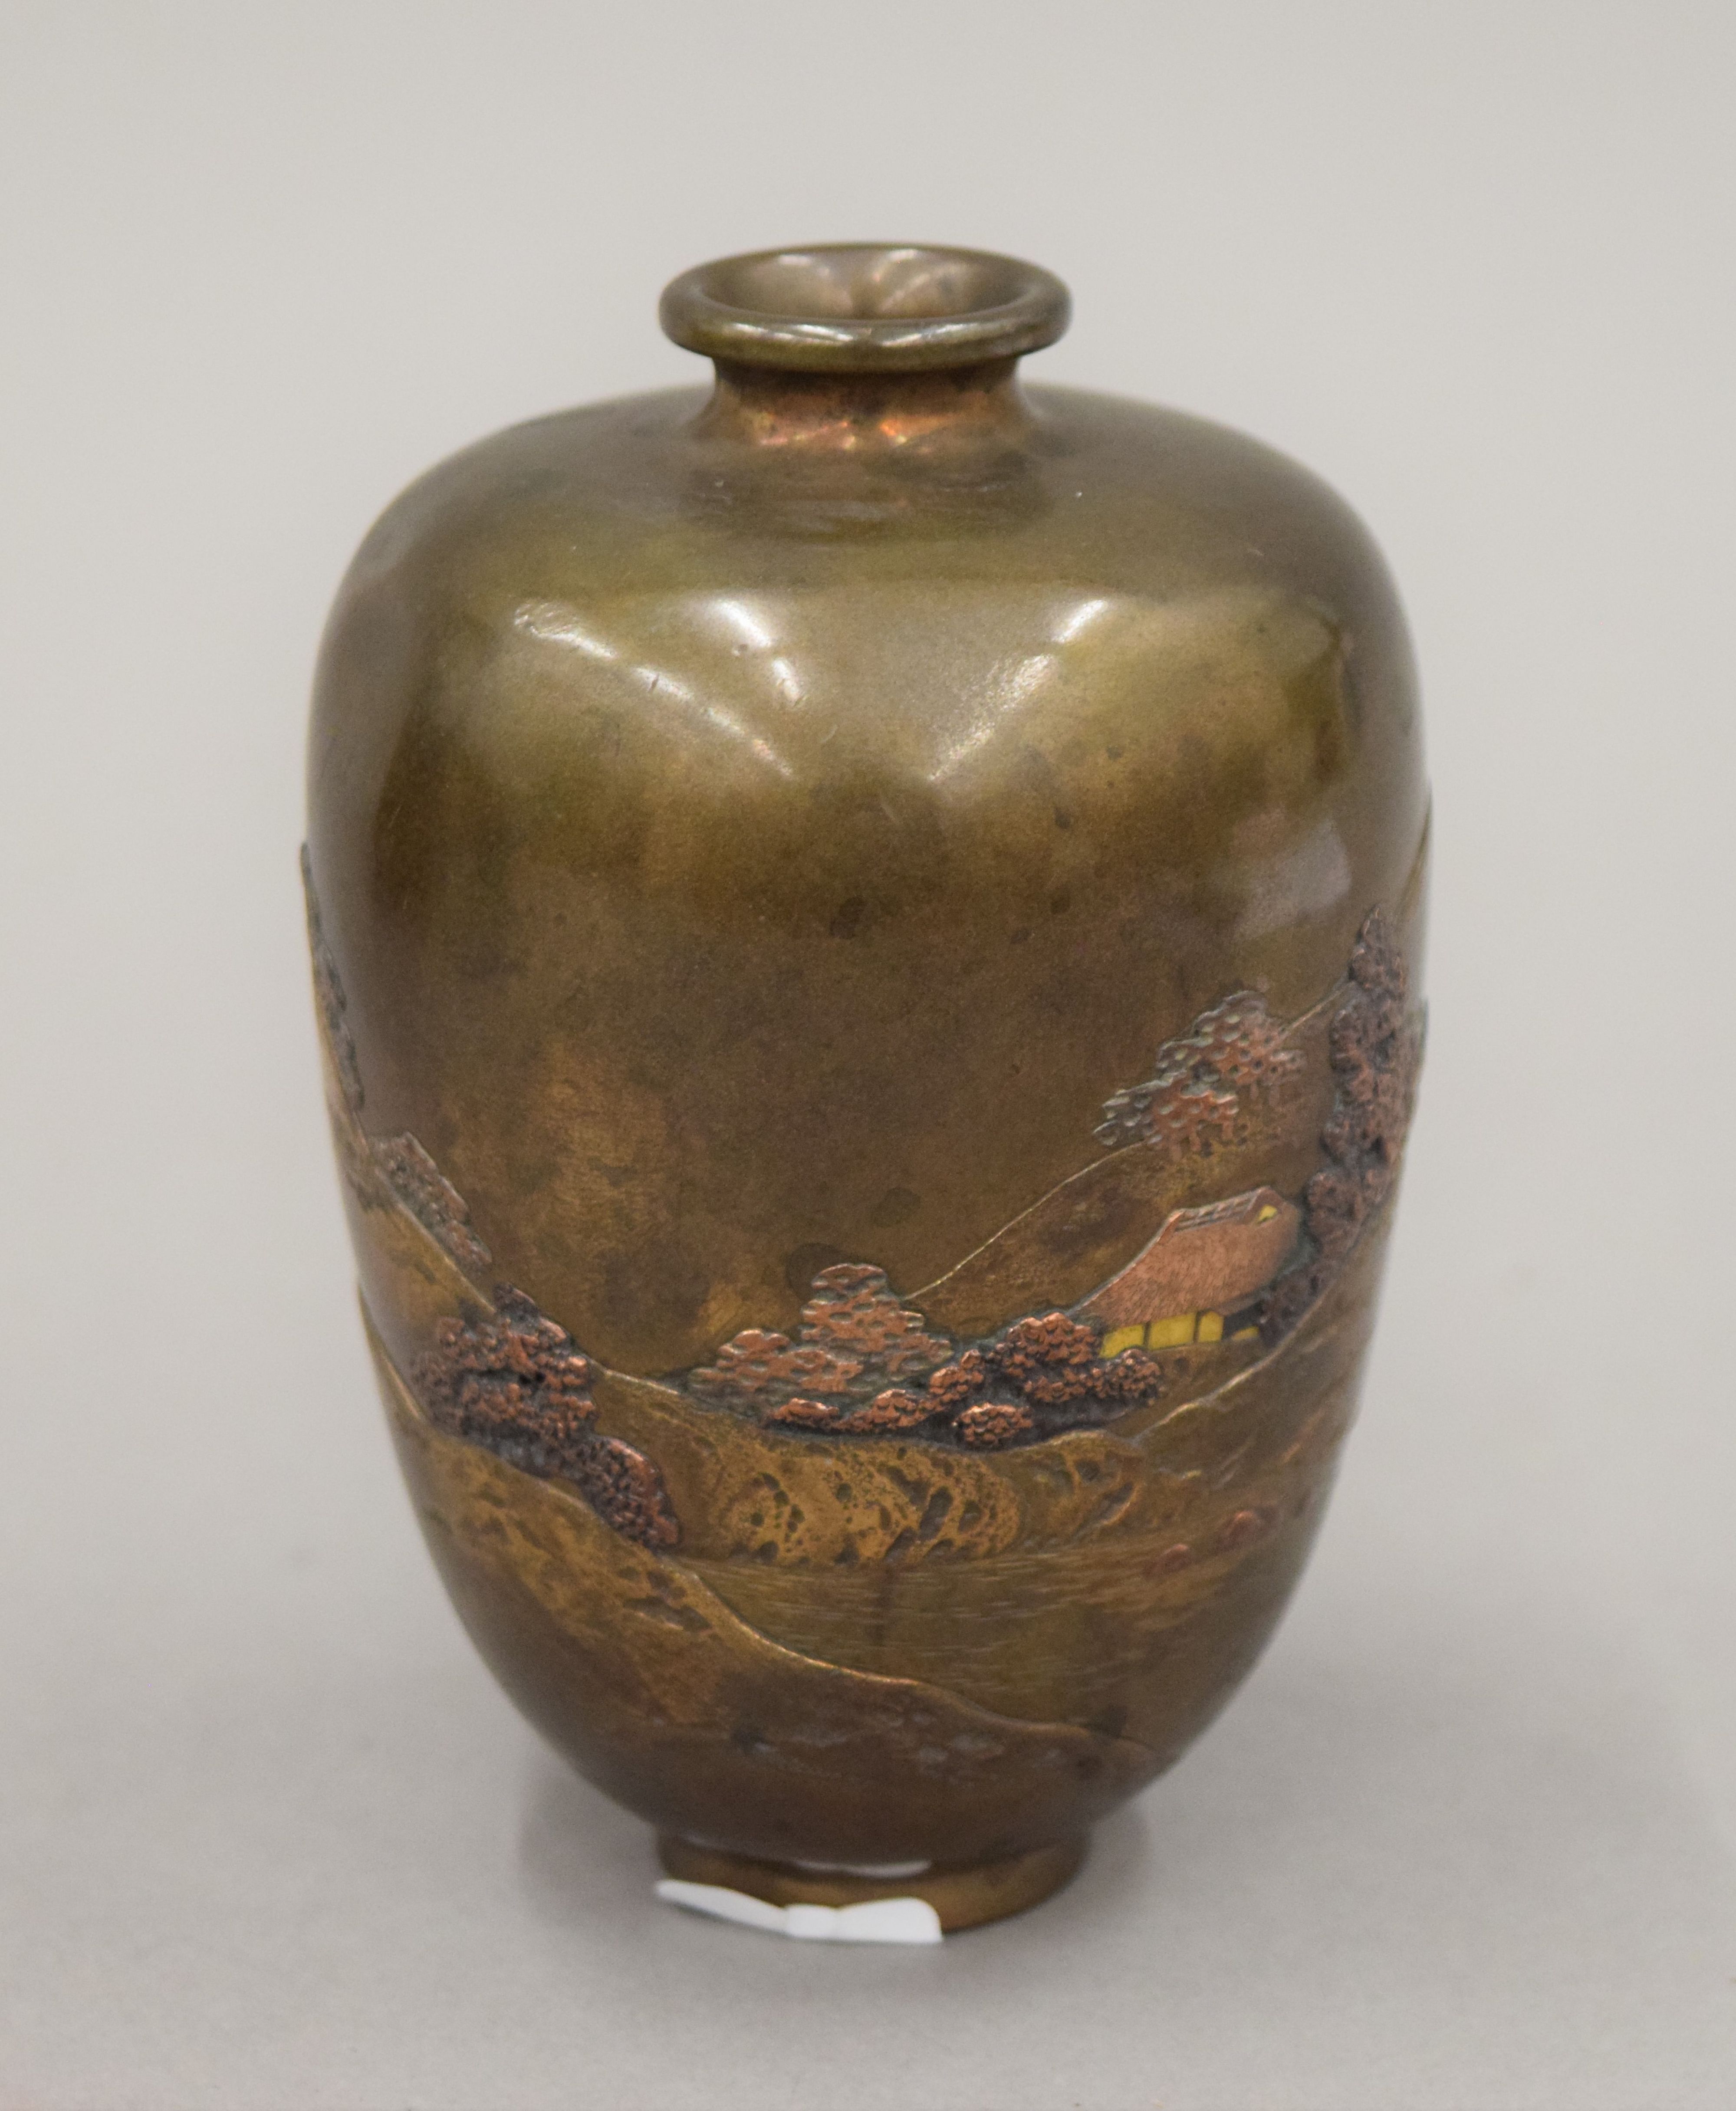 A Meiji Period Japanese gold inlaid bronze vase. 11 cm high.